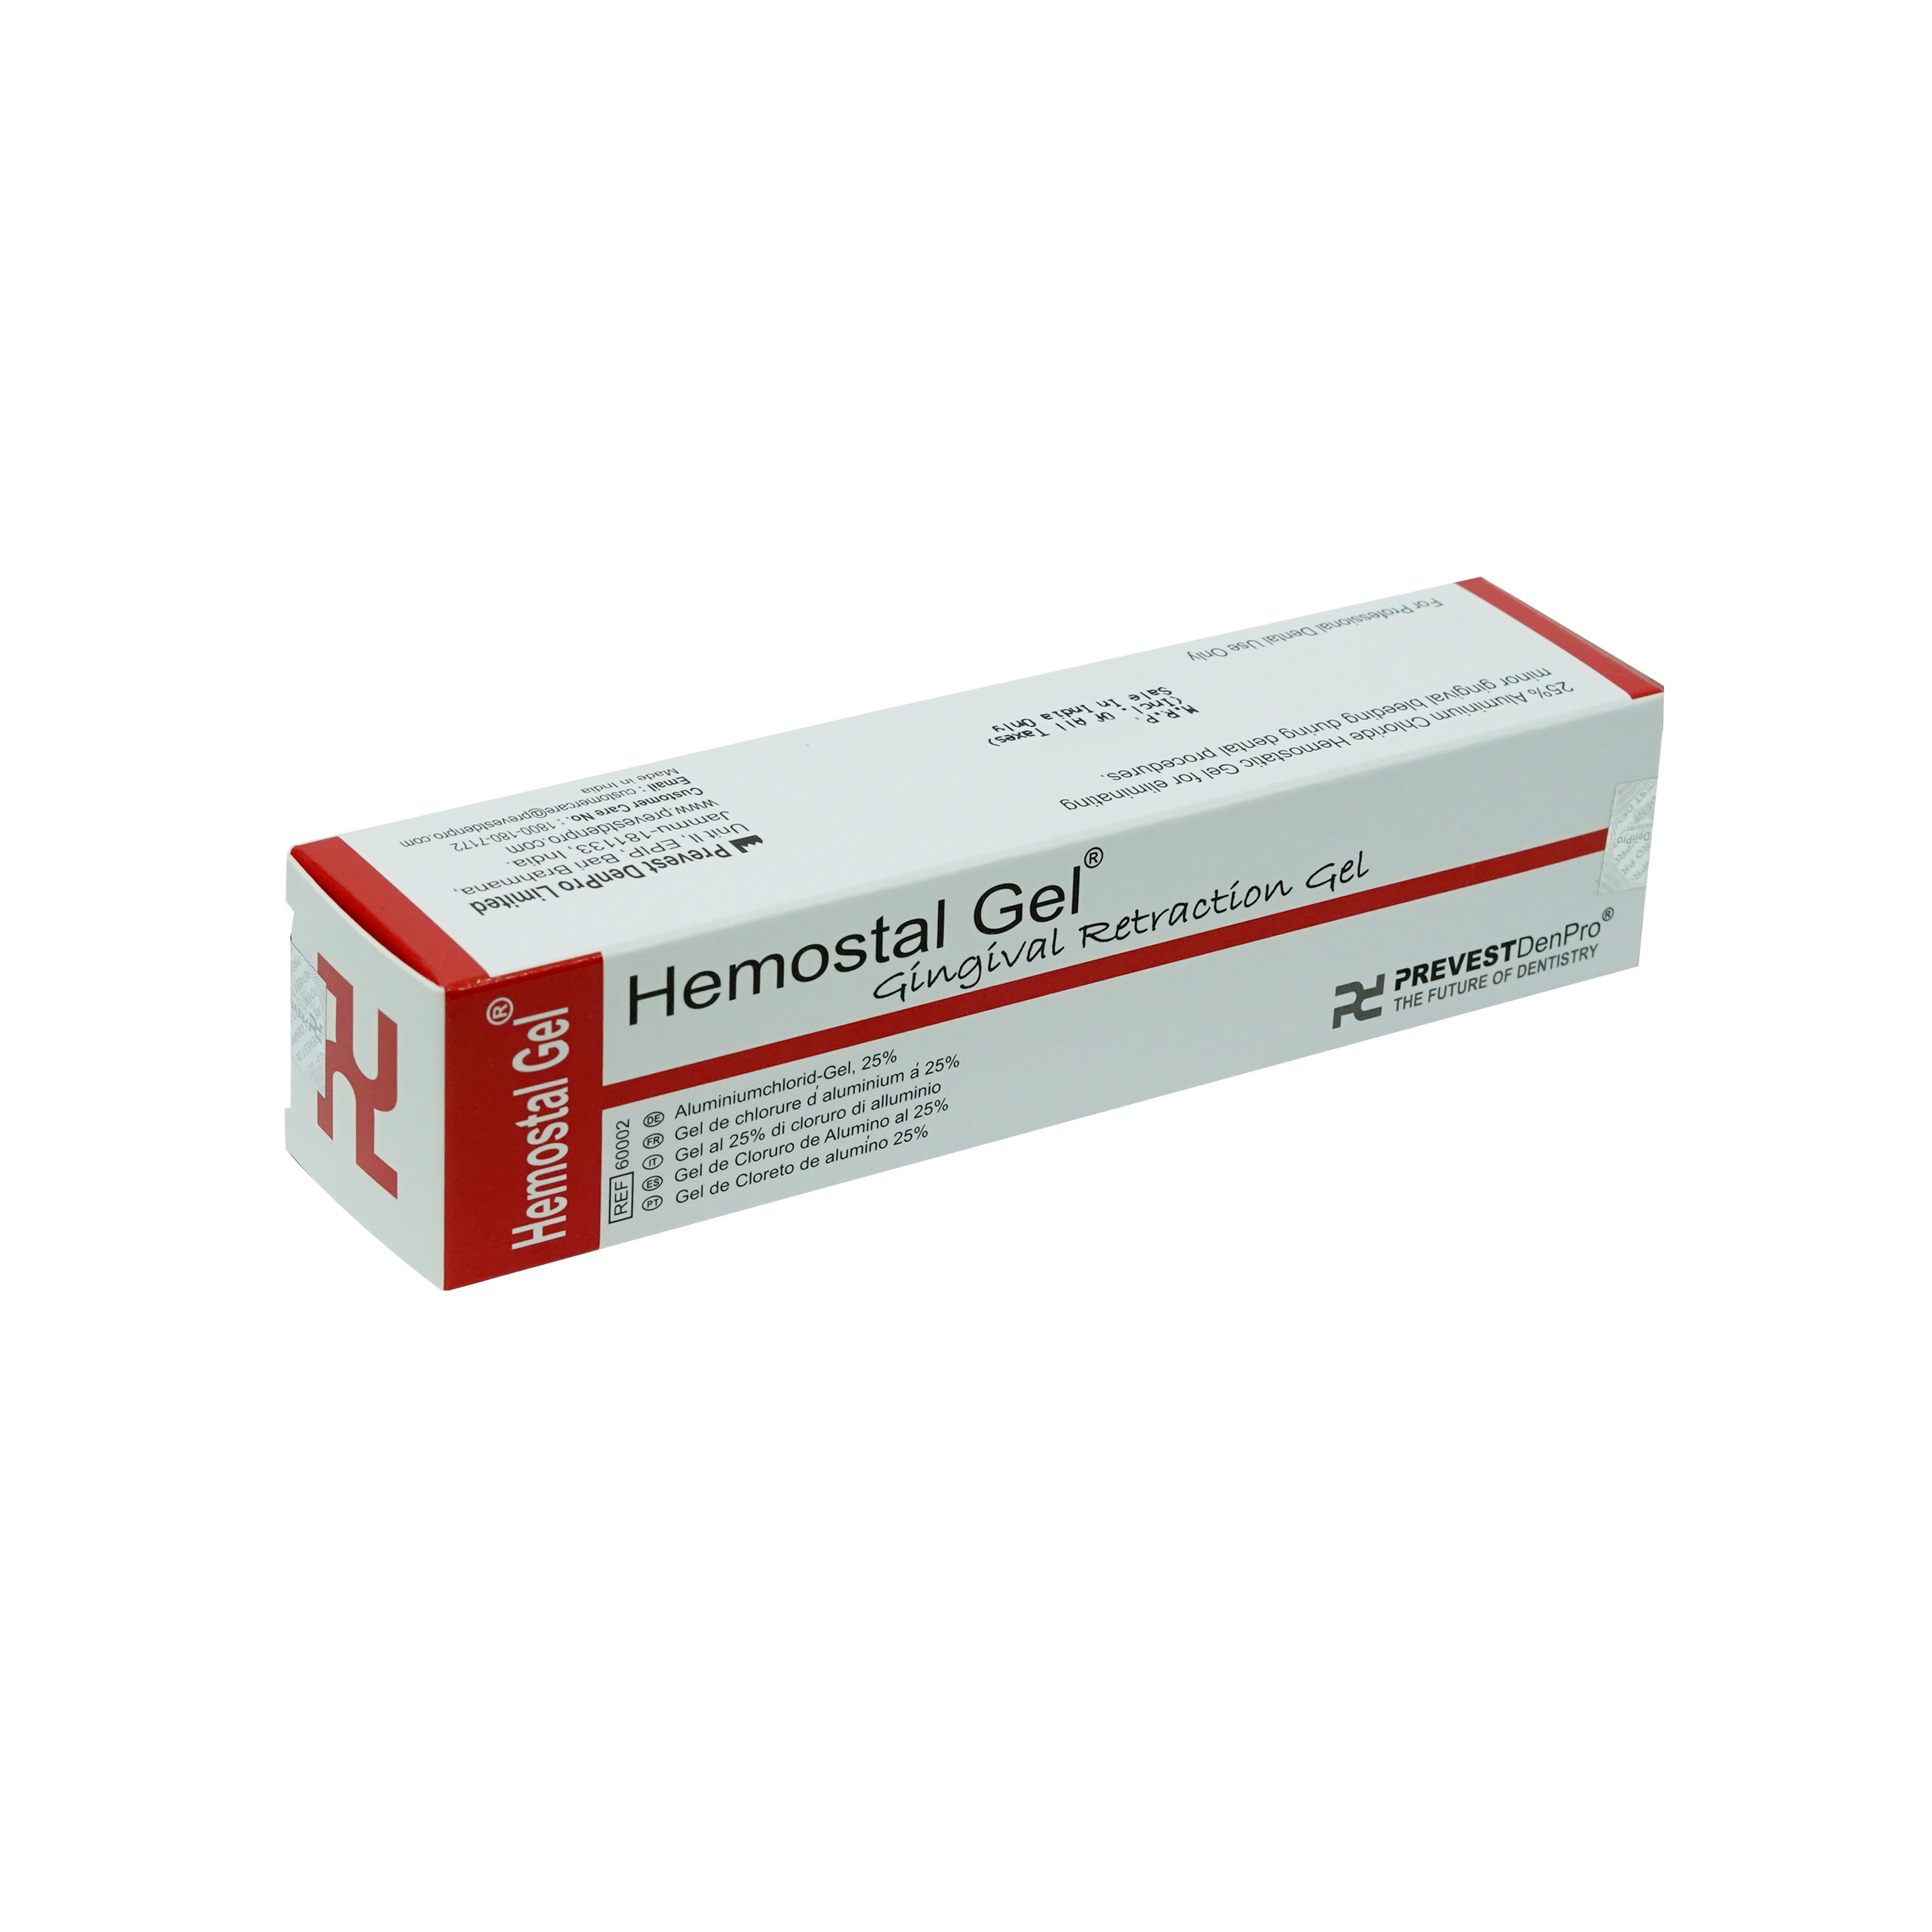 Prevest Denpro Hemostal Gel Aluminium Chloride Hemostatic Gel